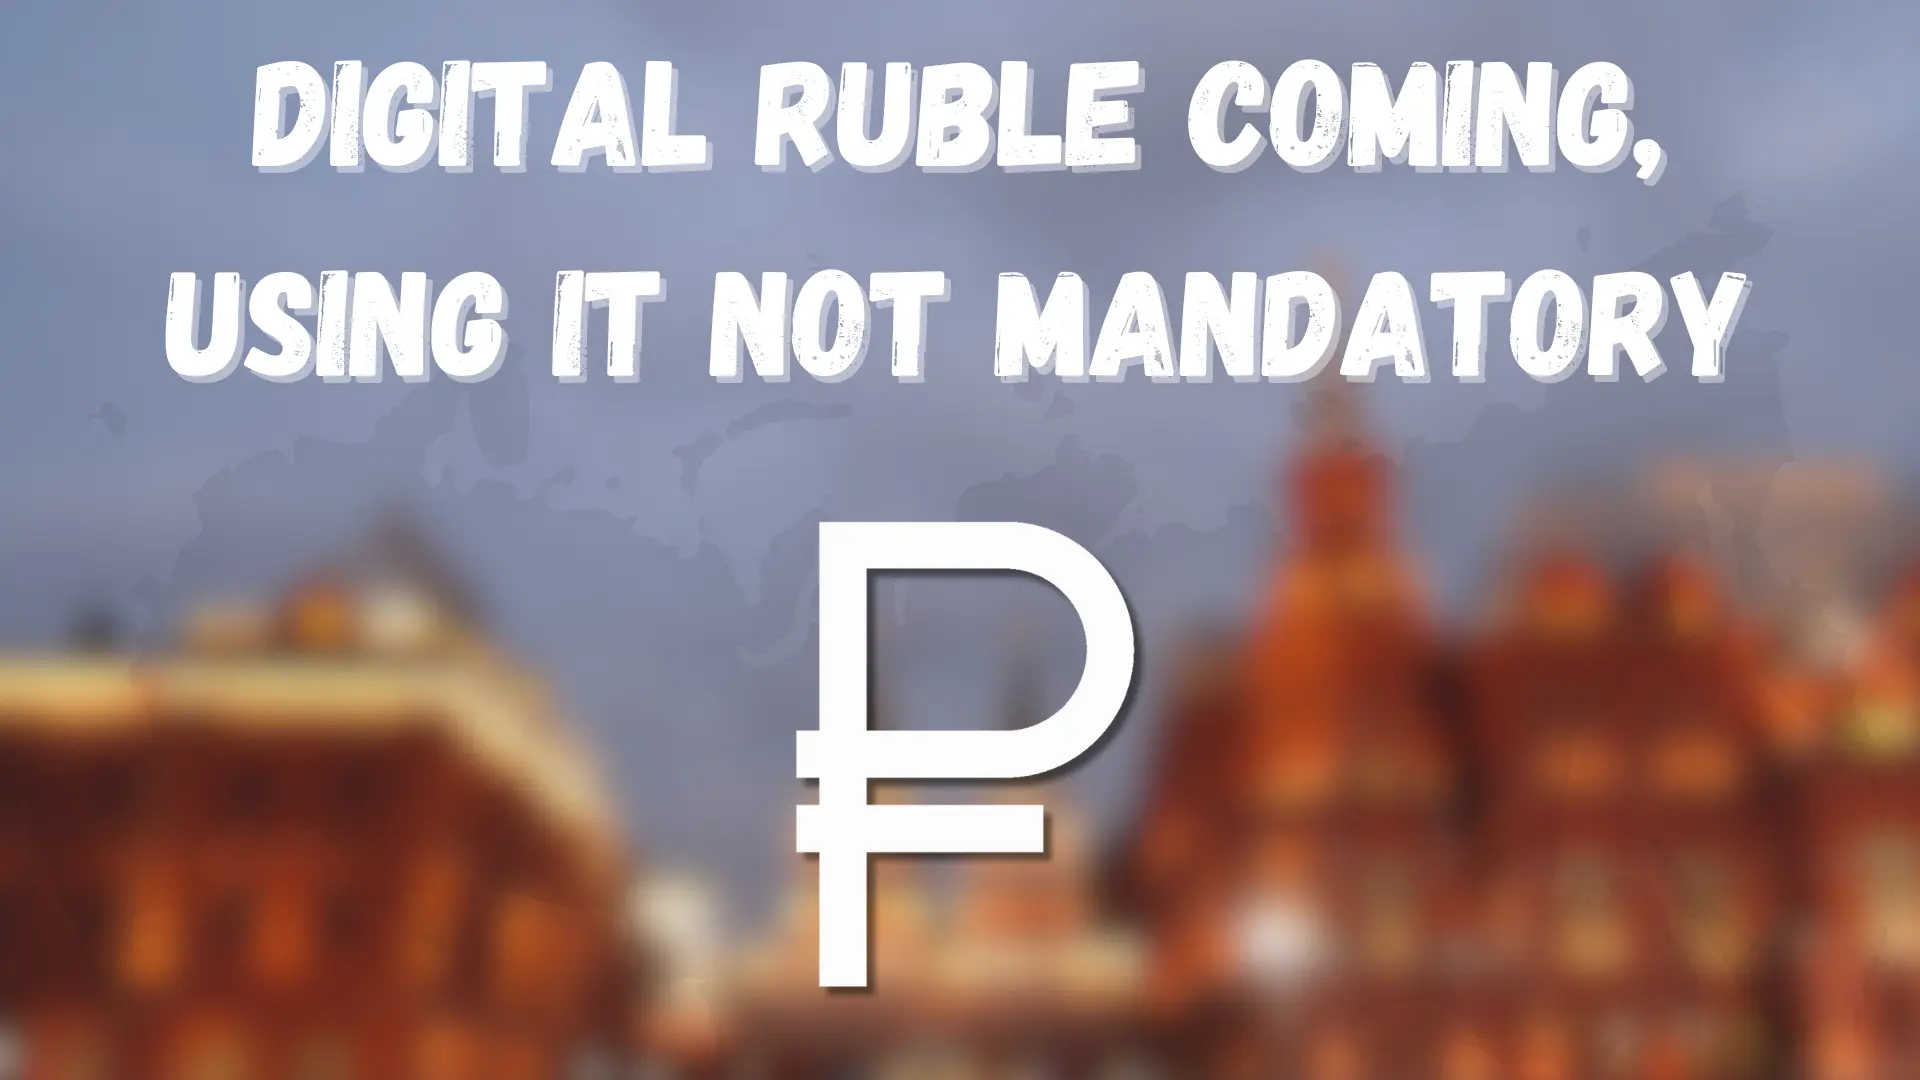 Digital Ruble Coming, Using It Not Mandatory